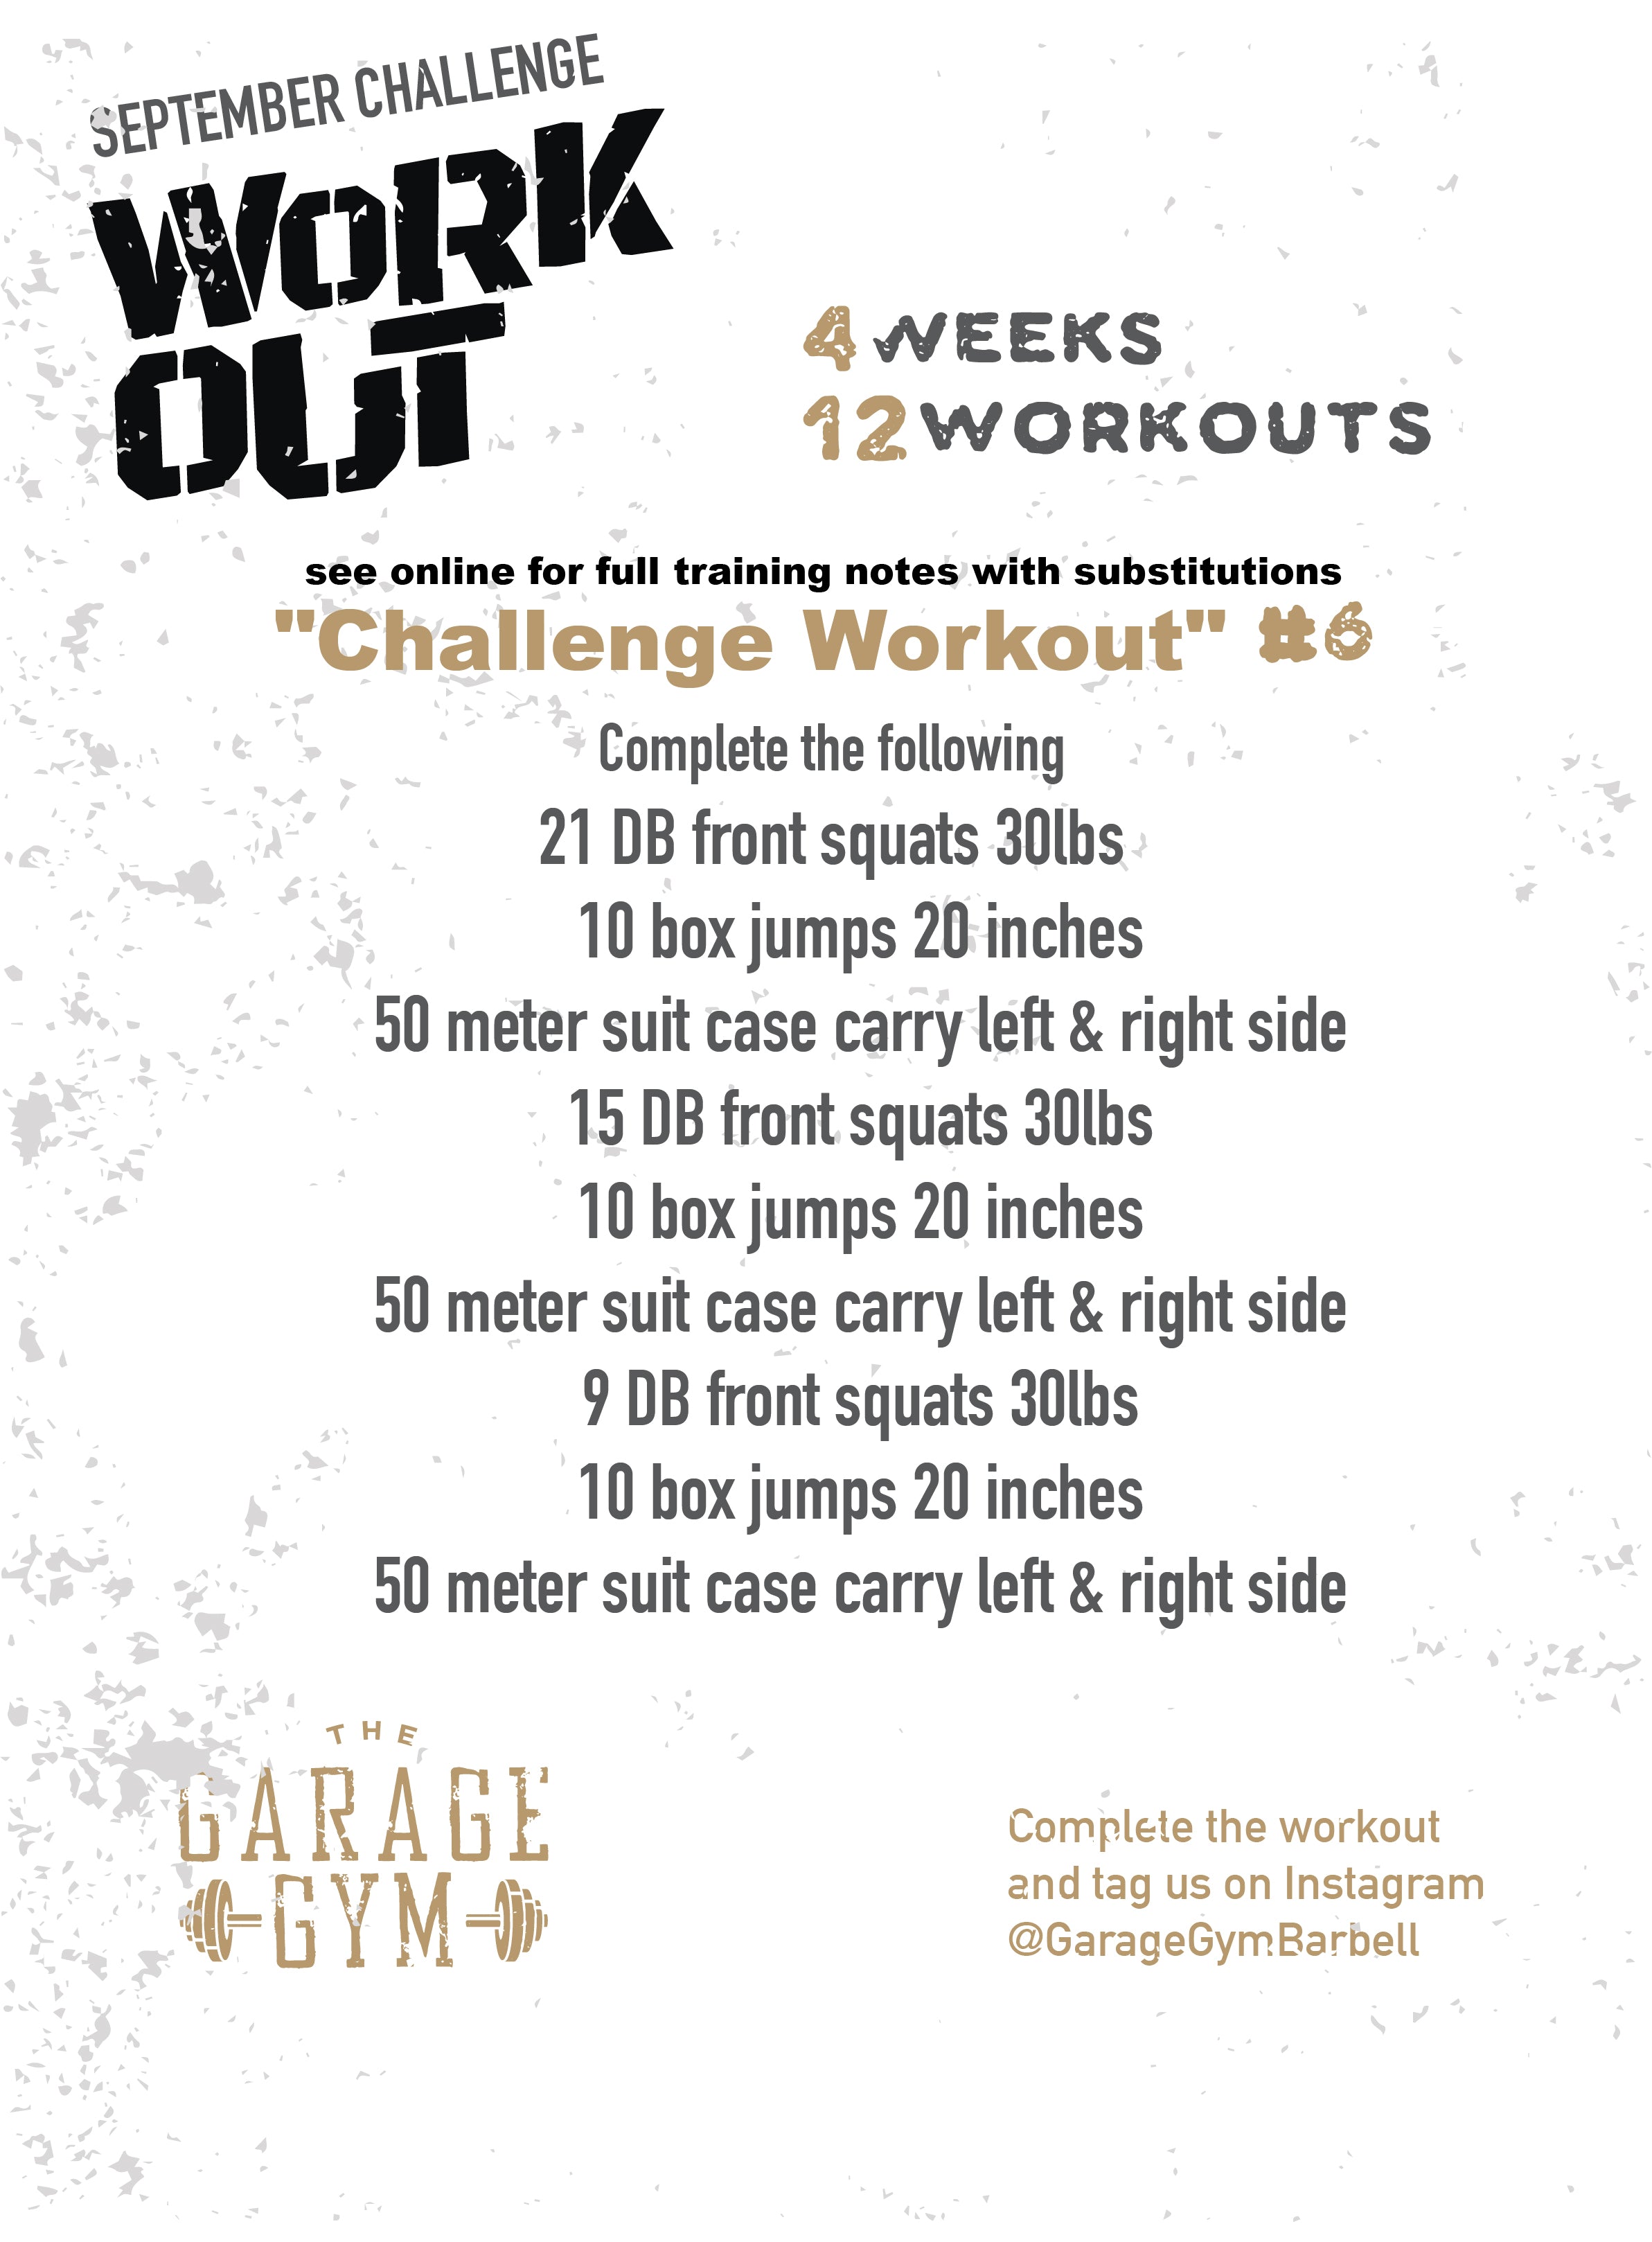 9-13-19 Challenge Workout #6